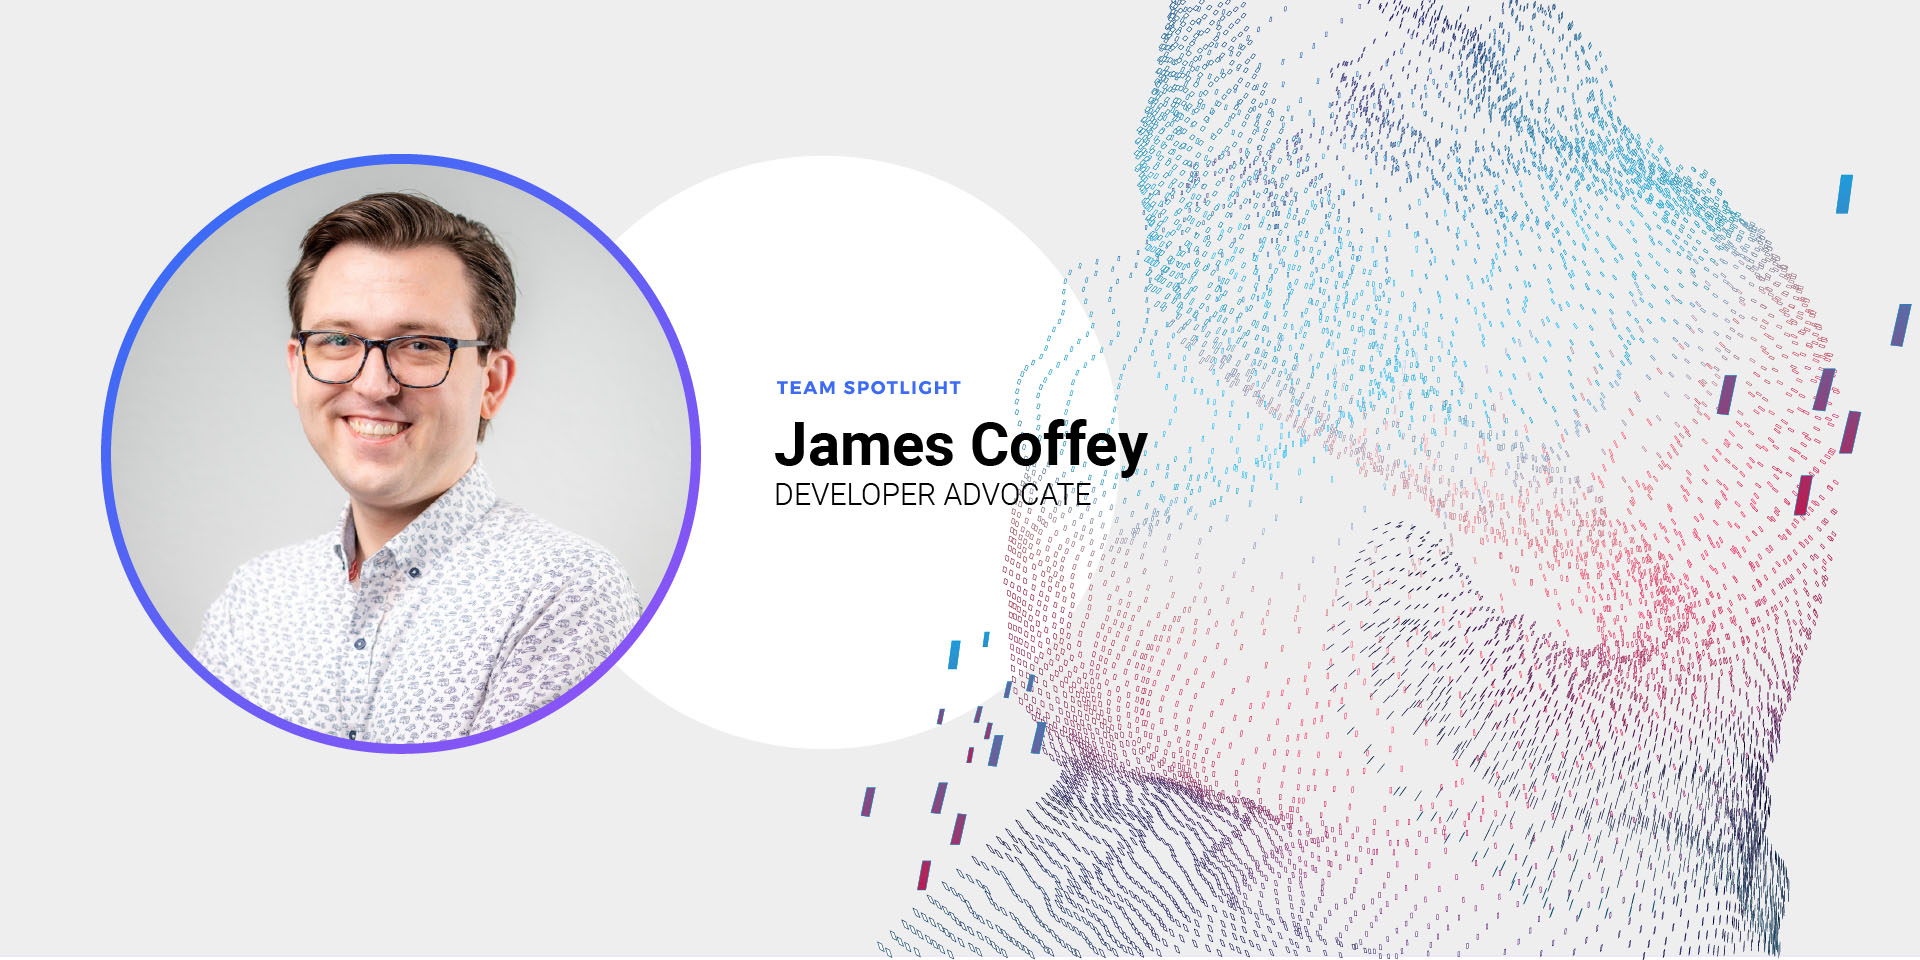 Team Spotlight - James Coffey